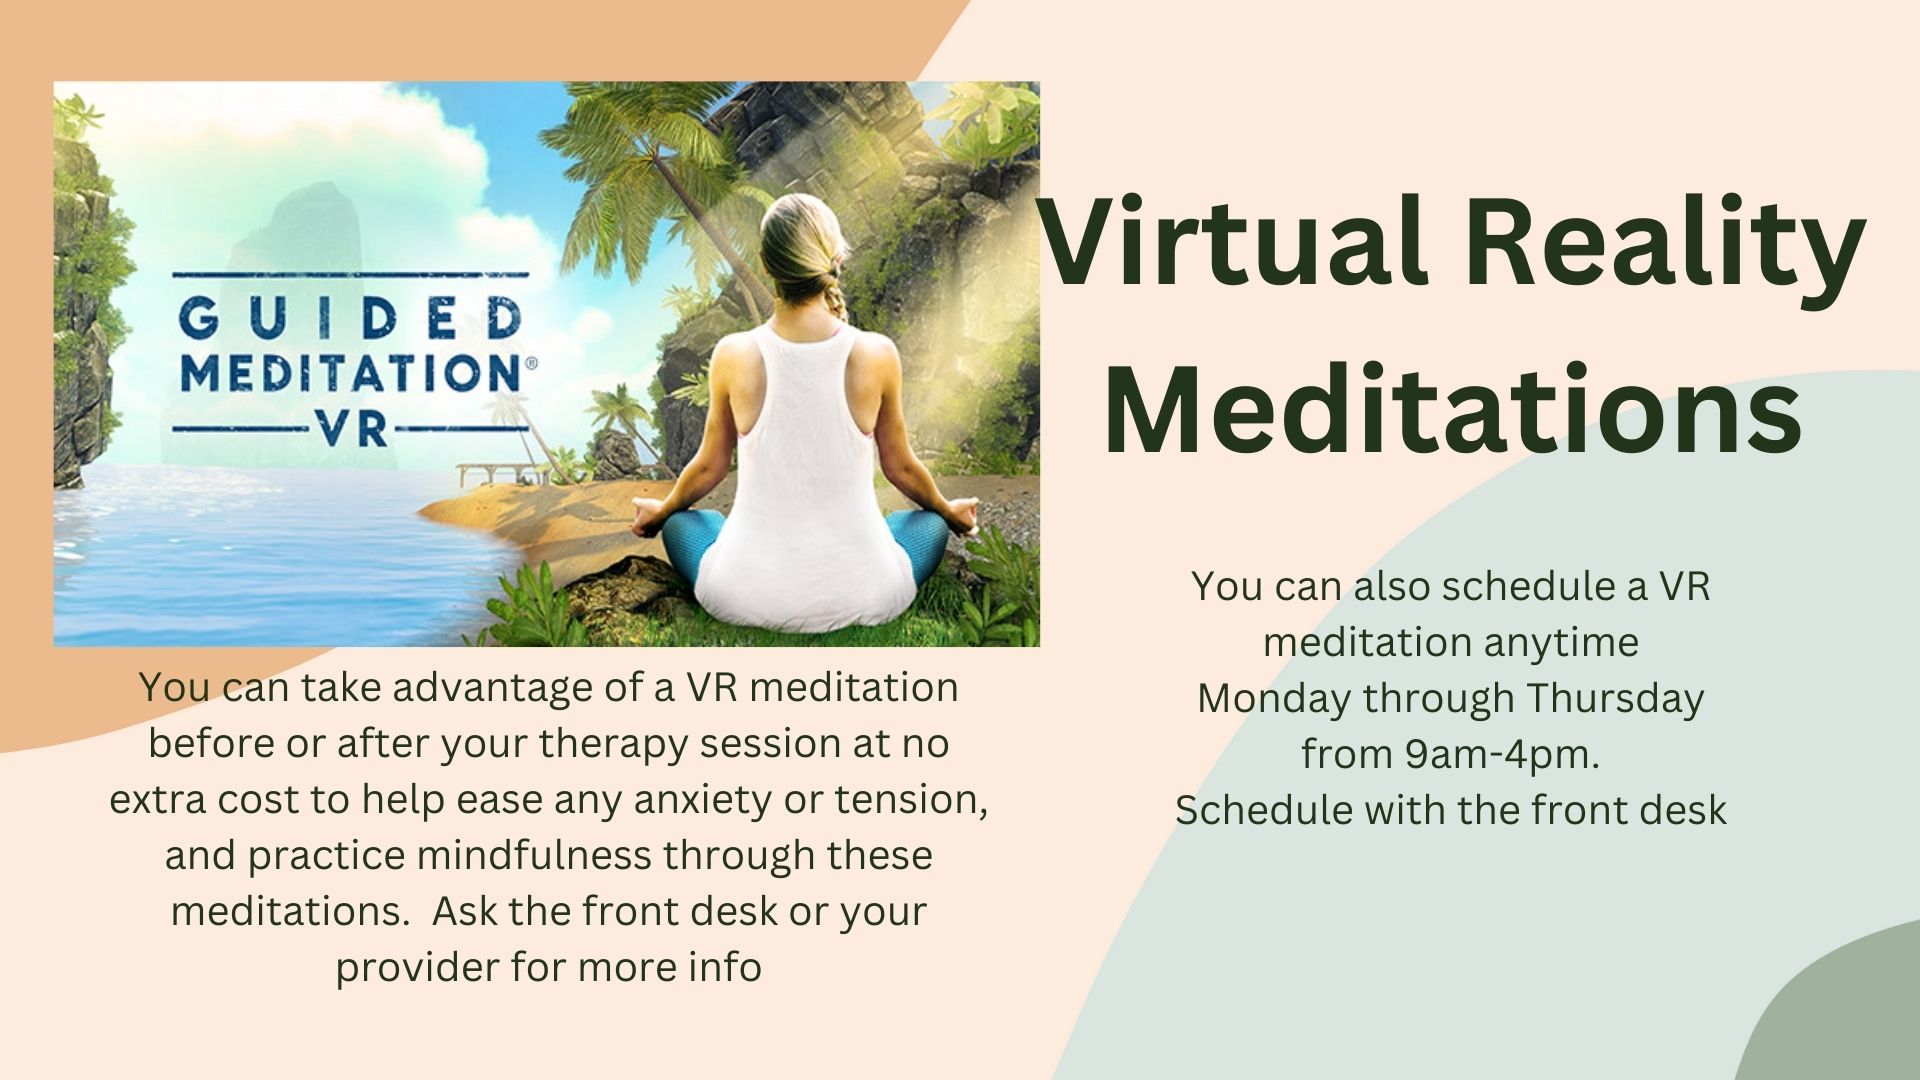 Virtual reality meditation information